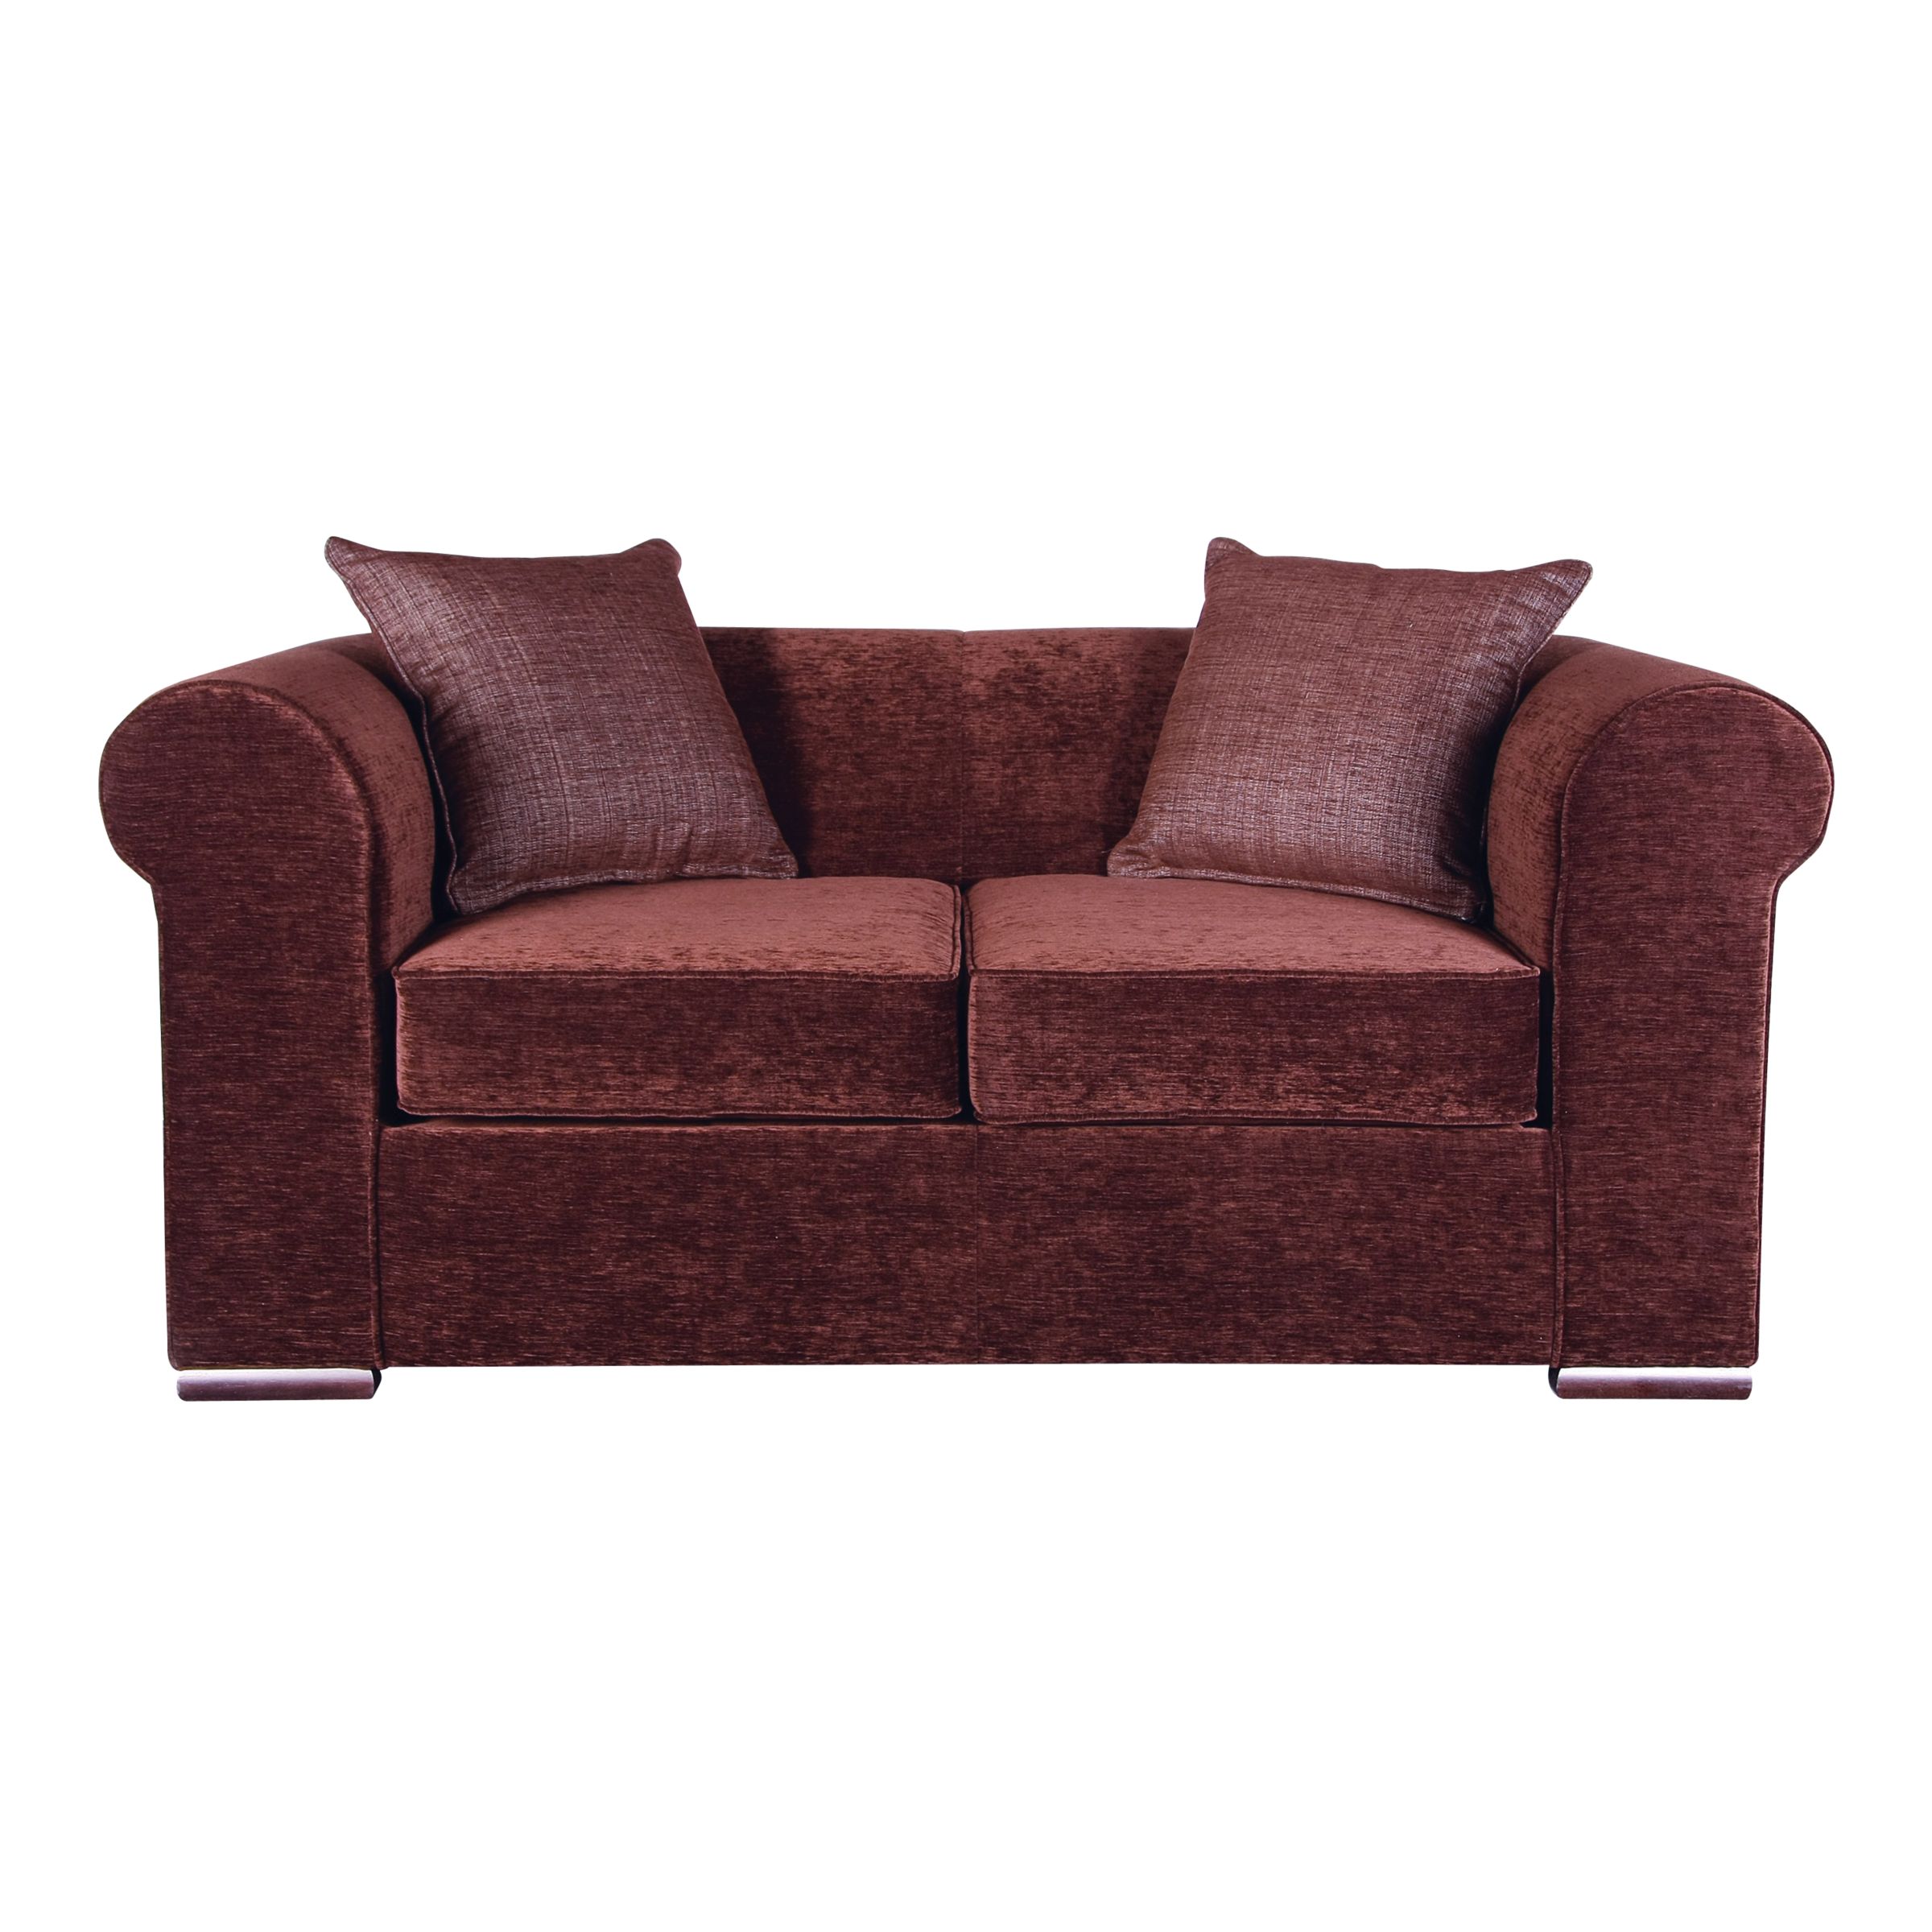 John Lewis Chilton Medium Sofa Bed with Sprung